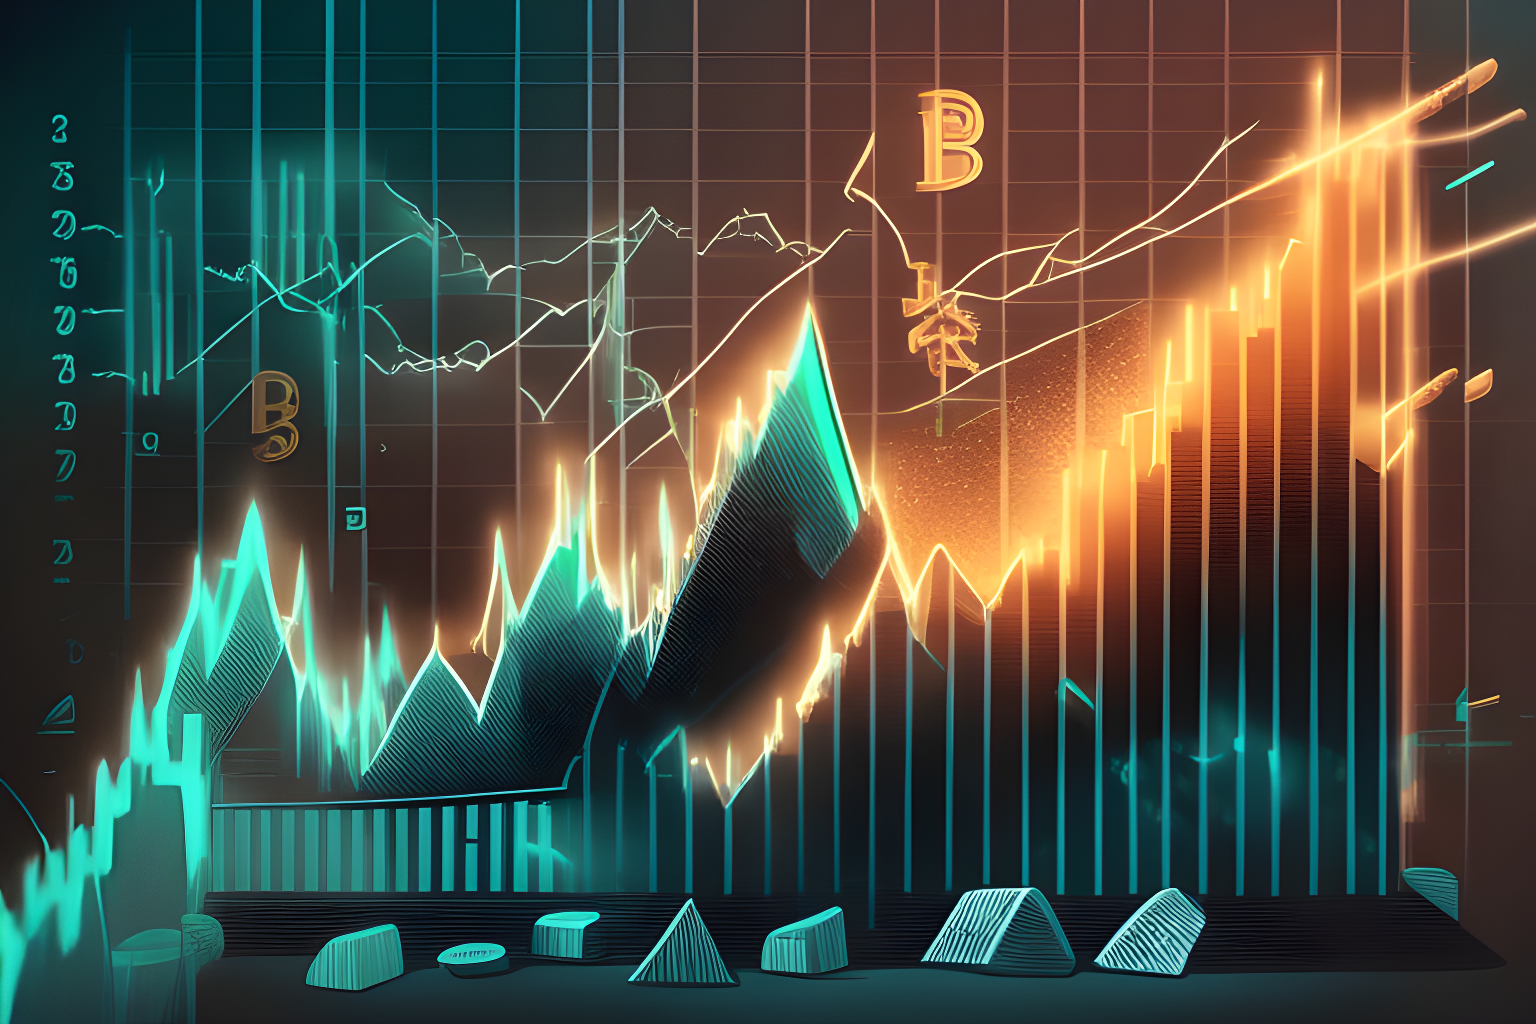 illustrate crypto stocks rising